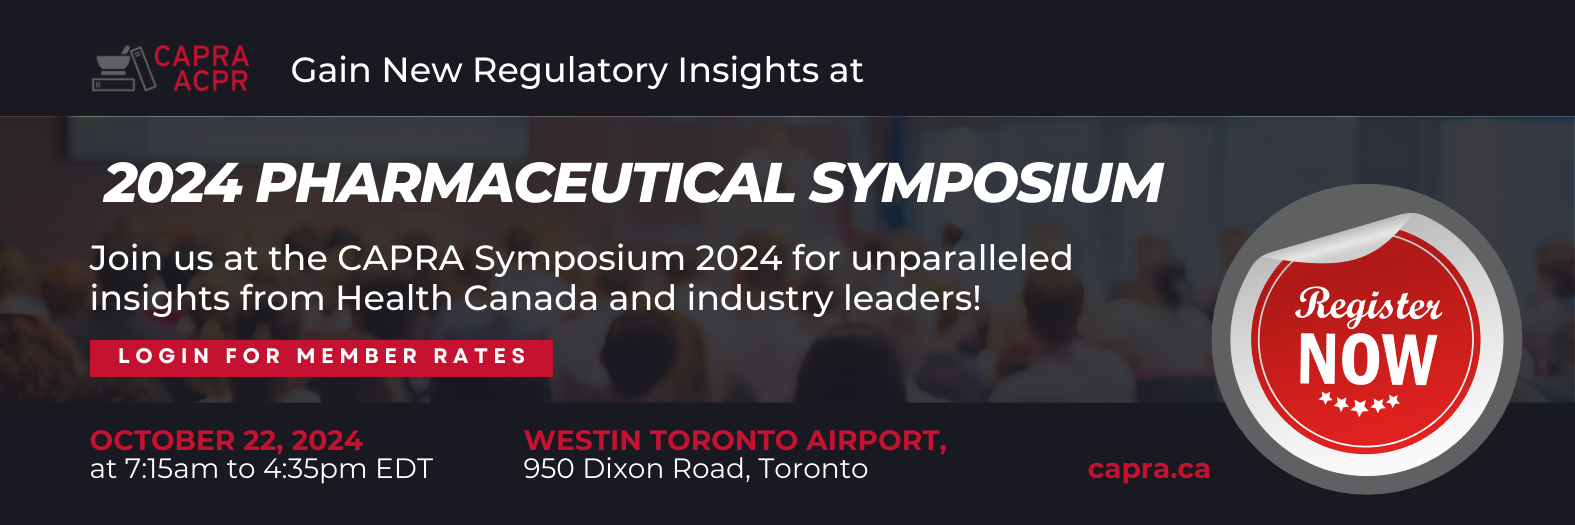 2024 Pharmaceutical Symposium Banner